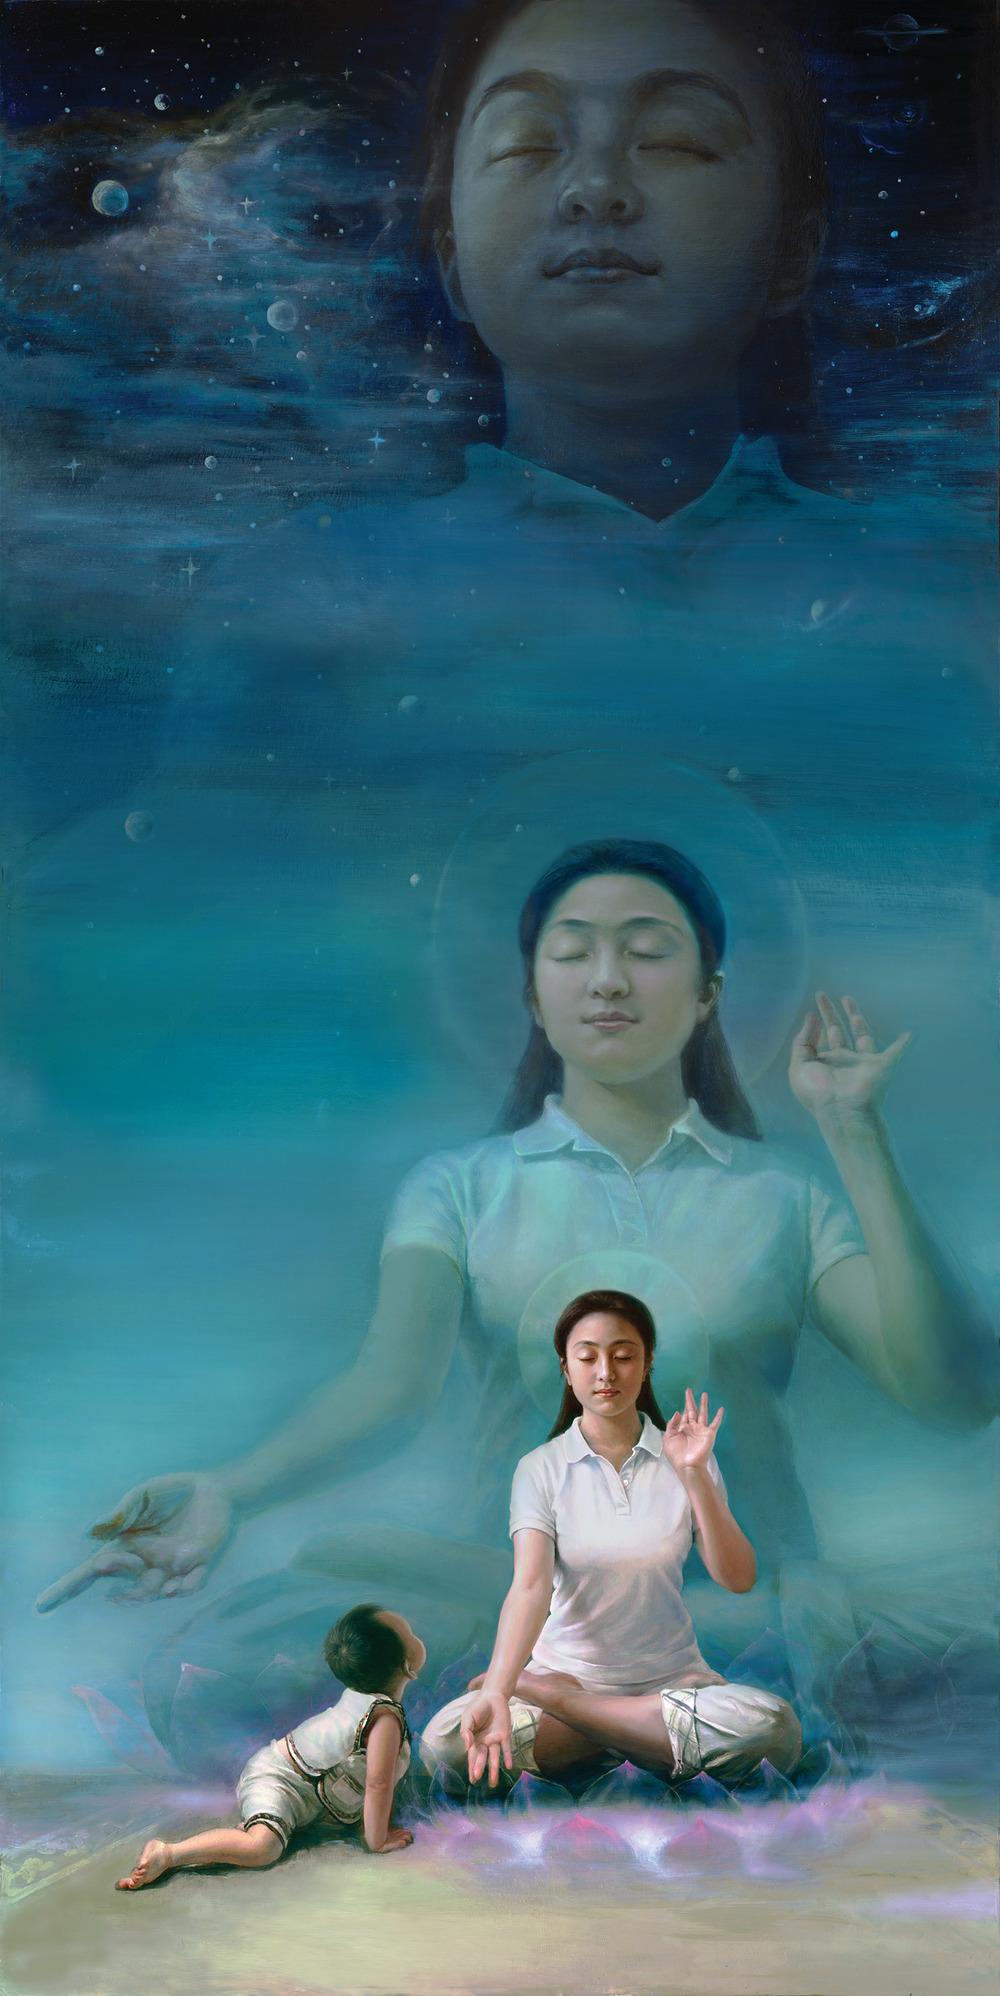 ©<a href="https://brandscovery.com/elevating-her-art-through-meditation">Xiaoping Chen</a>